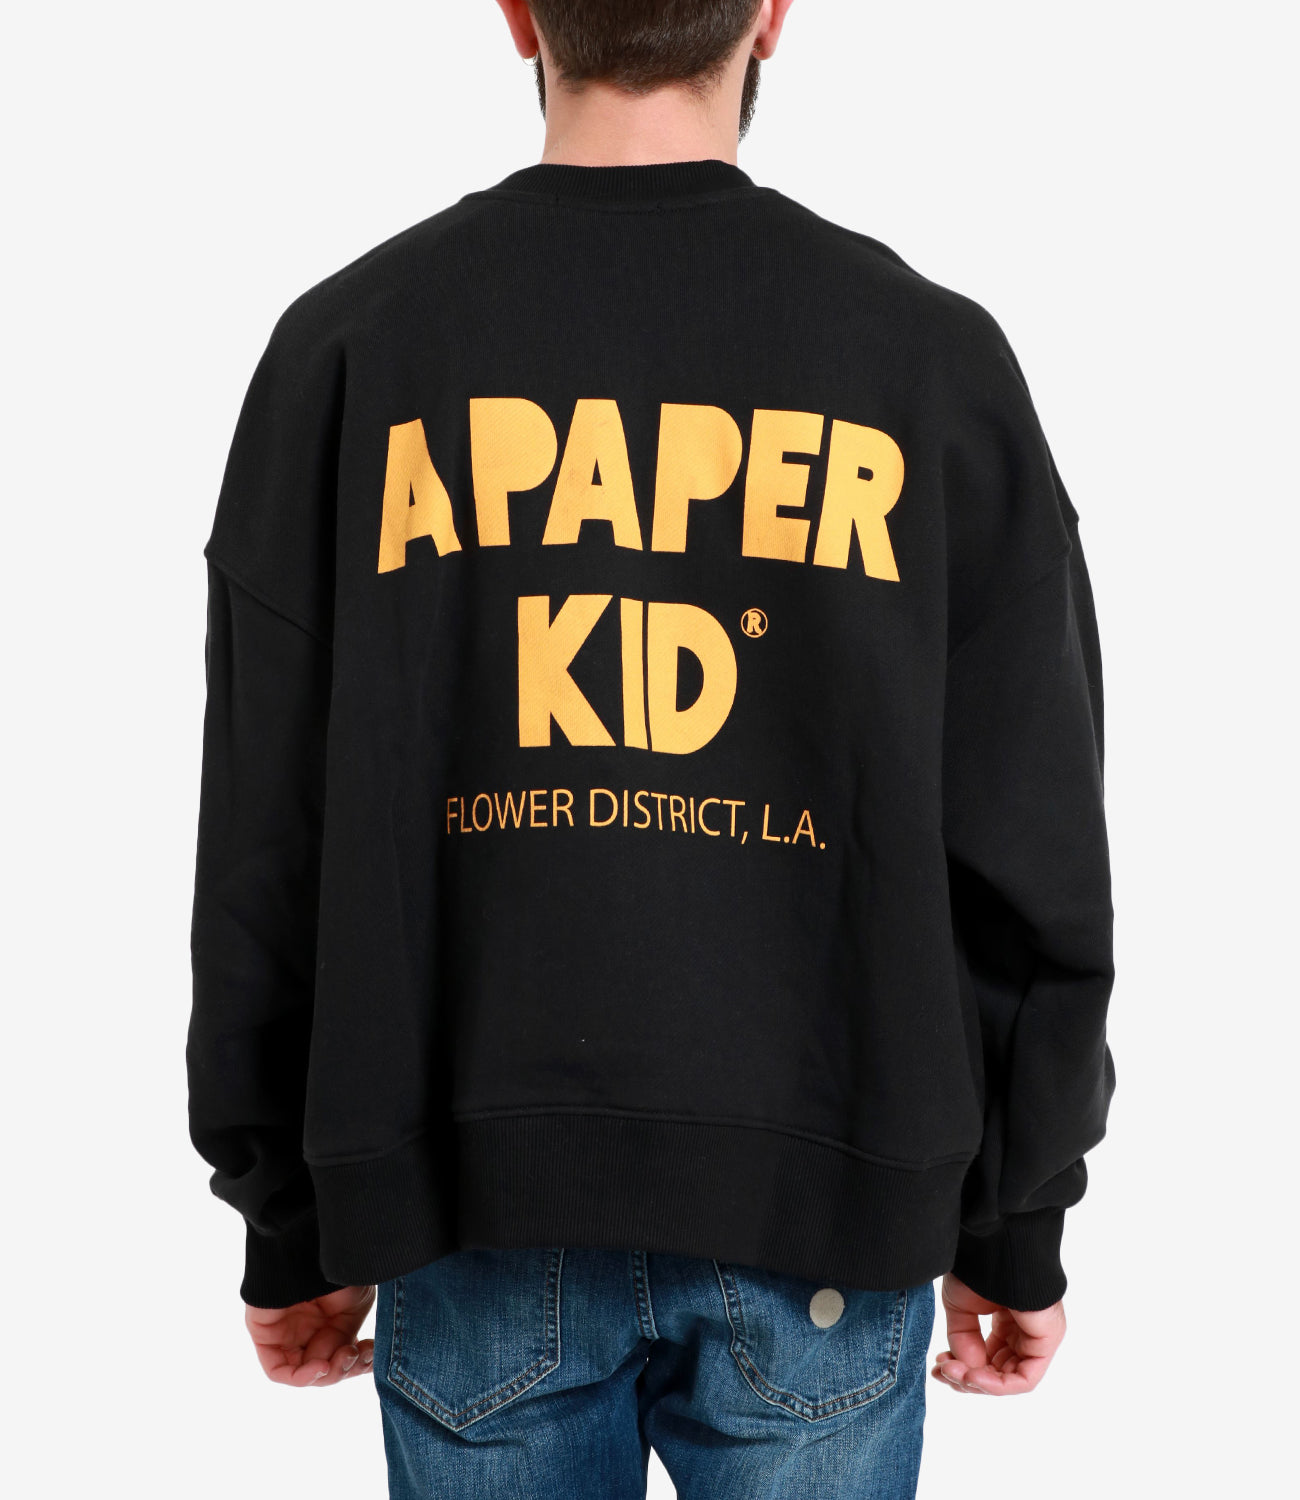 A Paper Kid | Black Sweatshirt